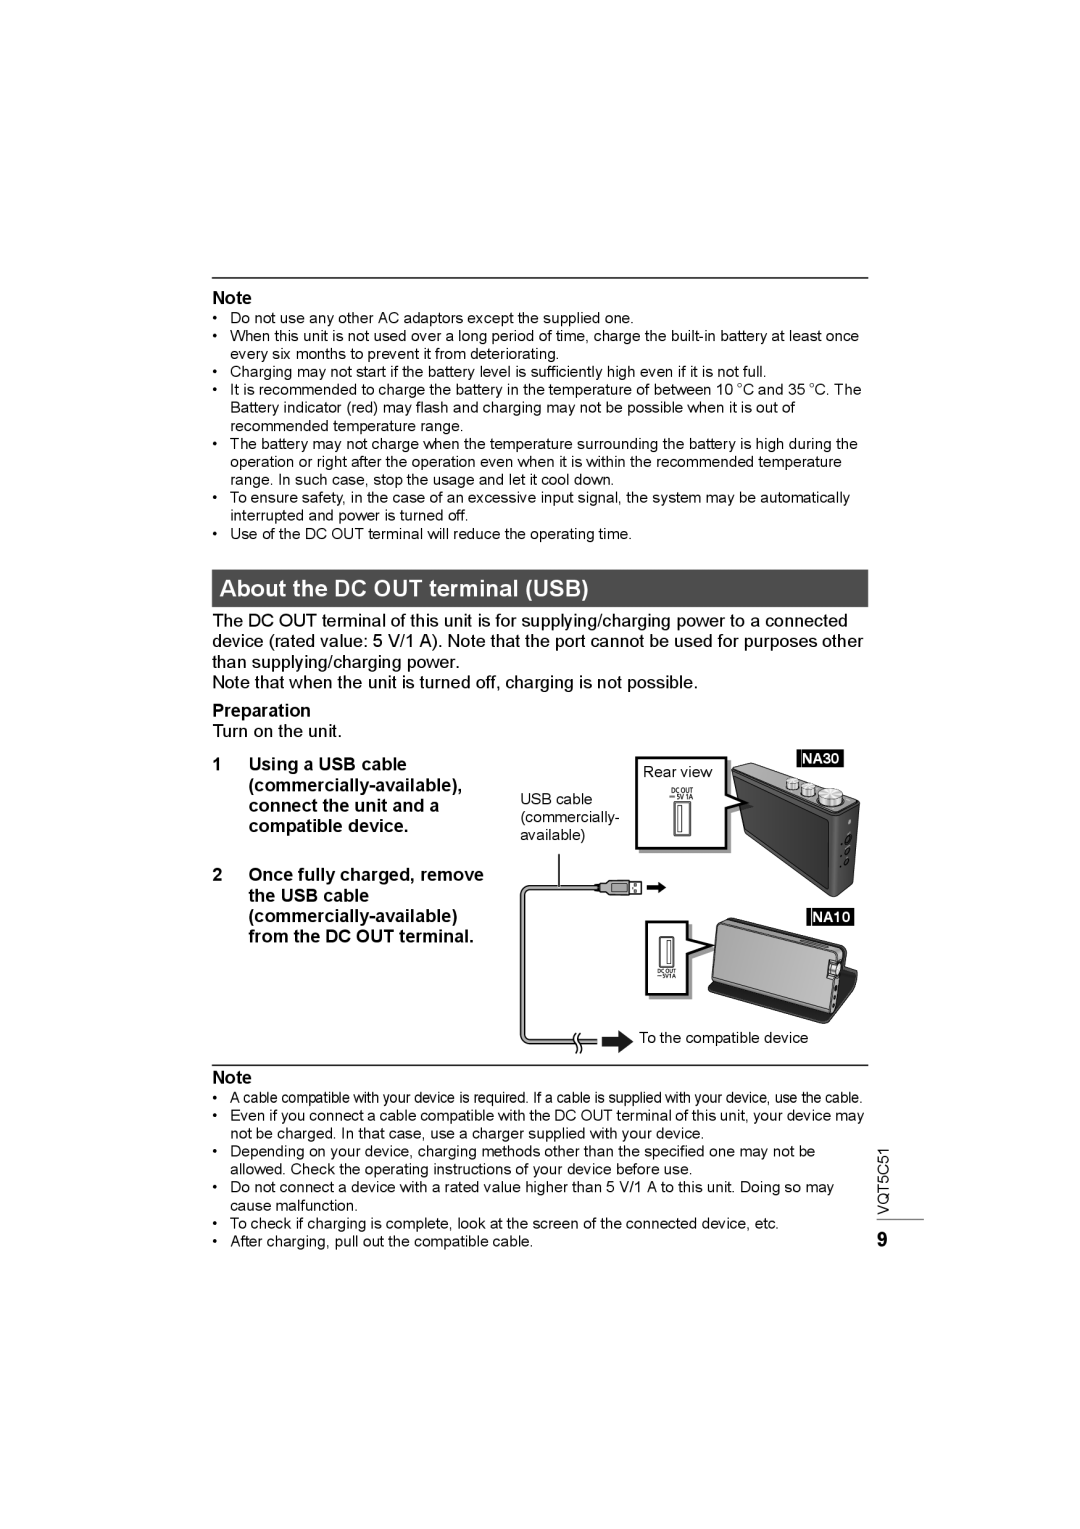 Panasonic SC-NA30/SC-NA10 manual About the DC OUT terminal USB, Preparation, NA30 NA10 